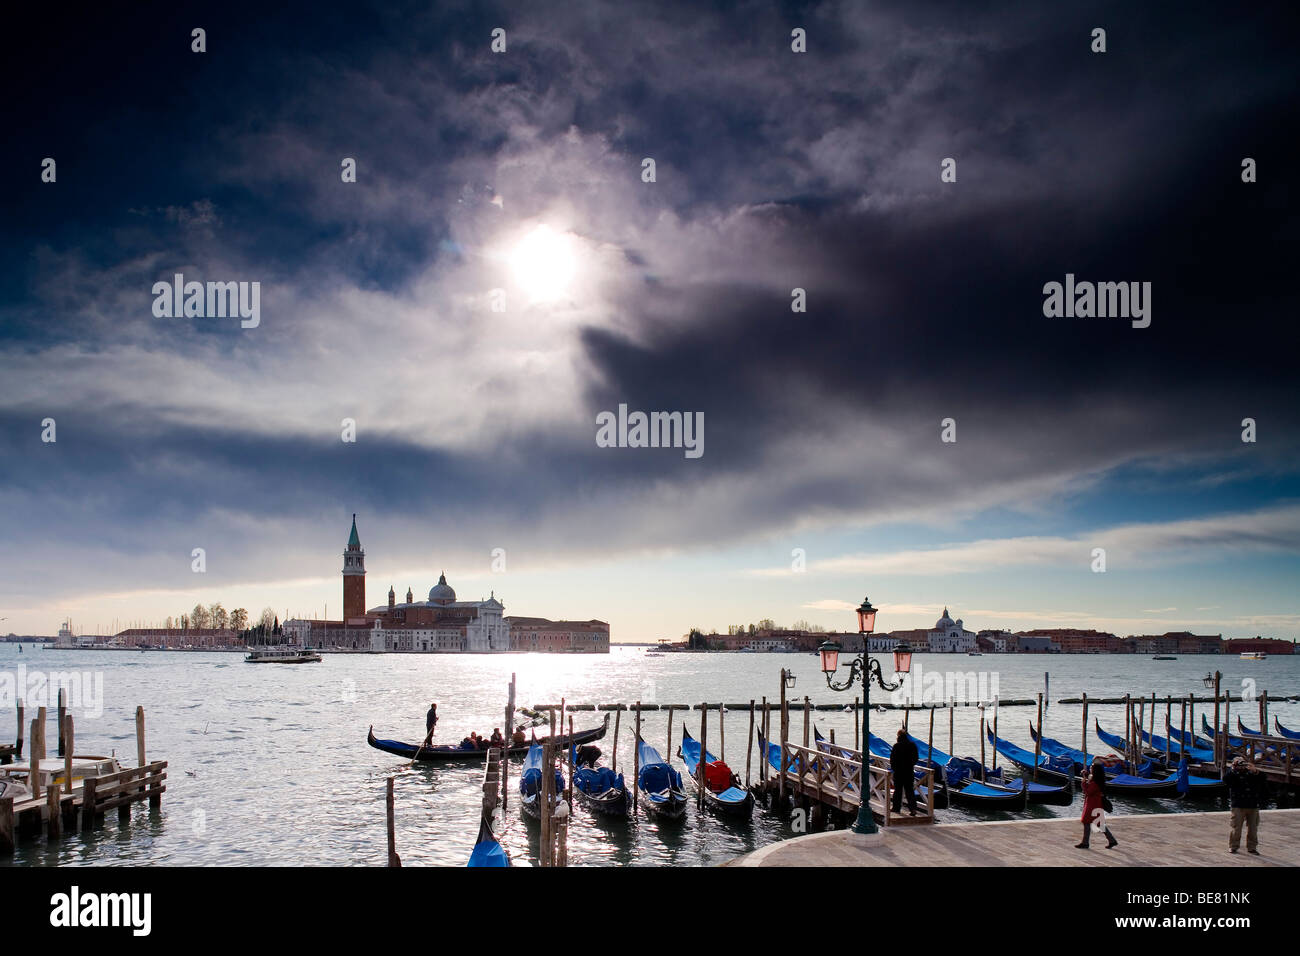 Quay at St Mark's Square with Gondolas and the view to San Giorgio Maggiore Island, Venice, Italy, Europe Stock Photo